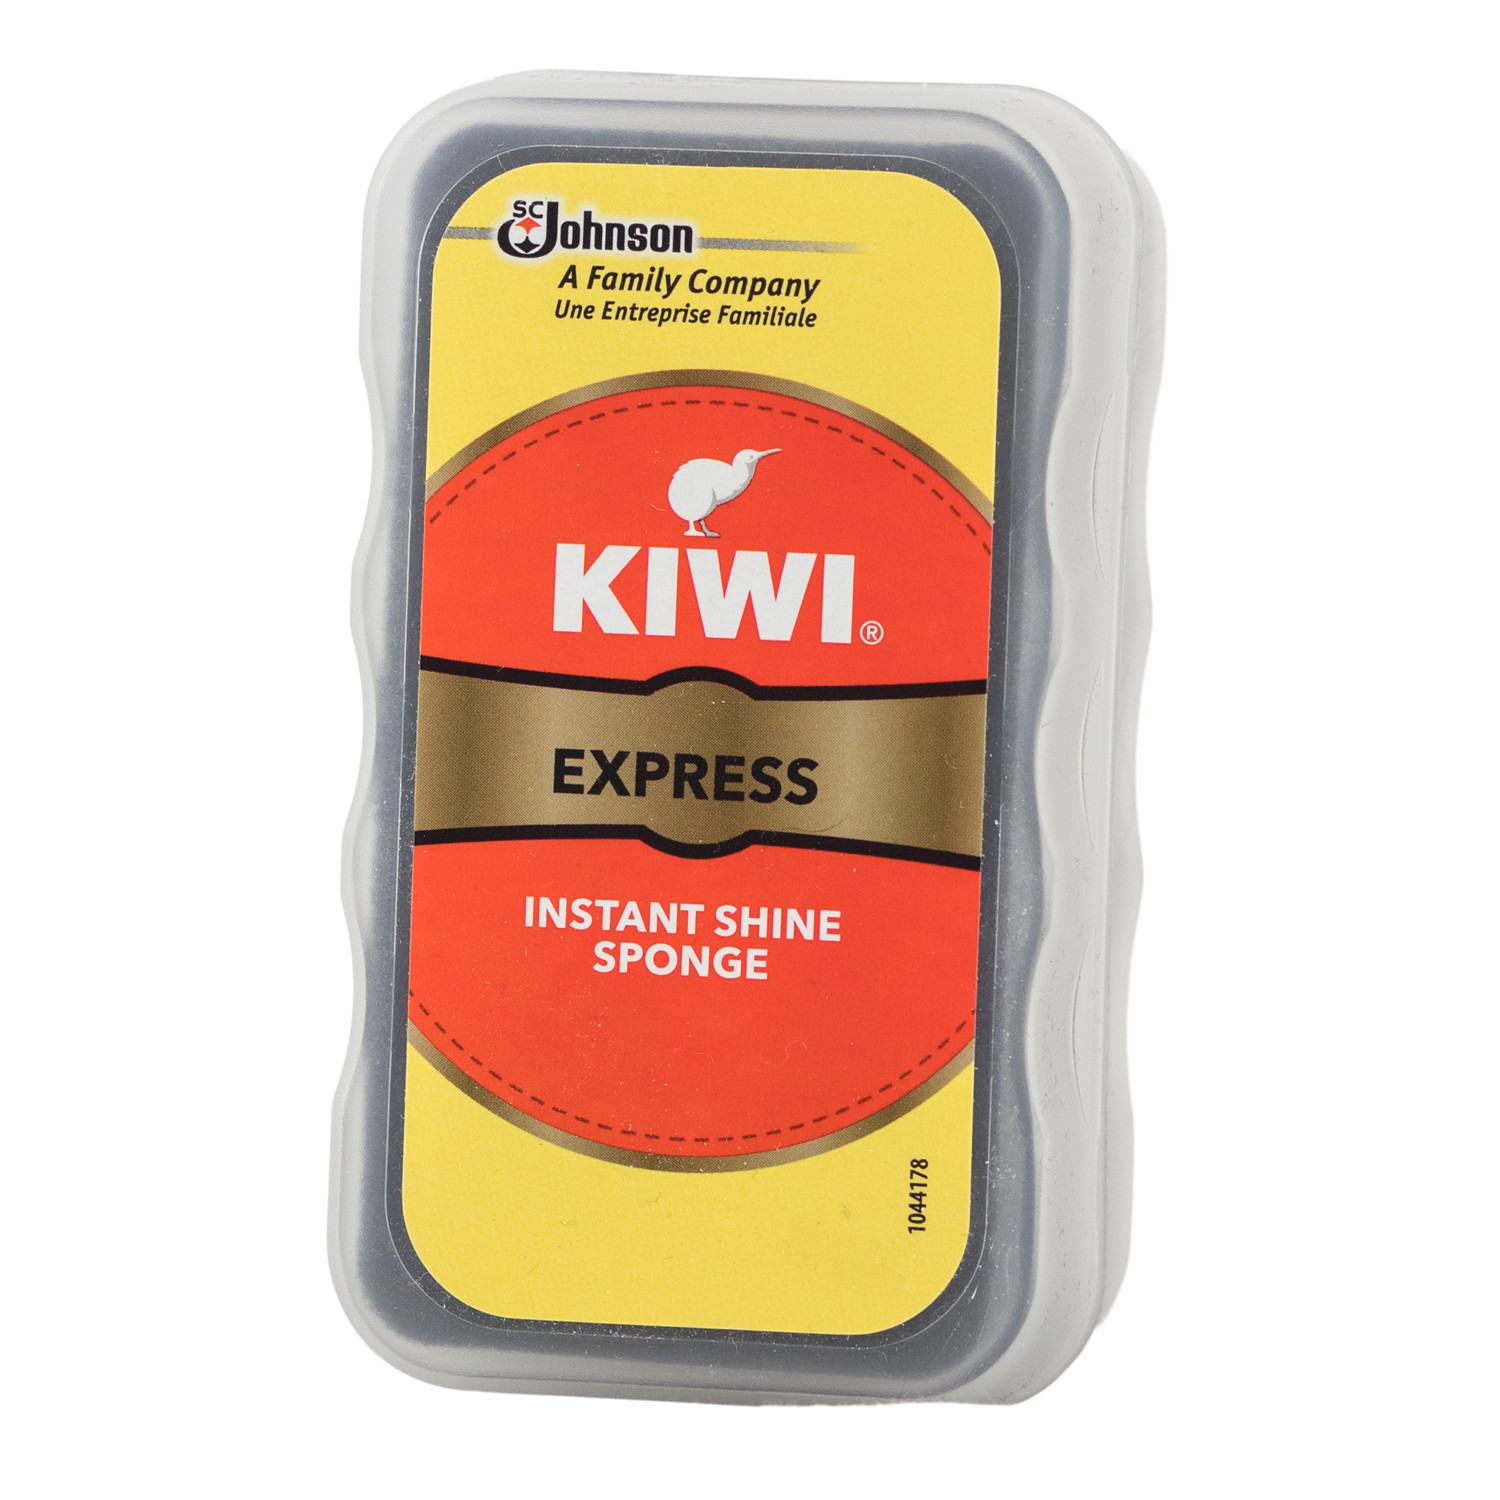 Kiwi Instant Shine svamp